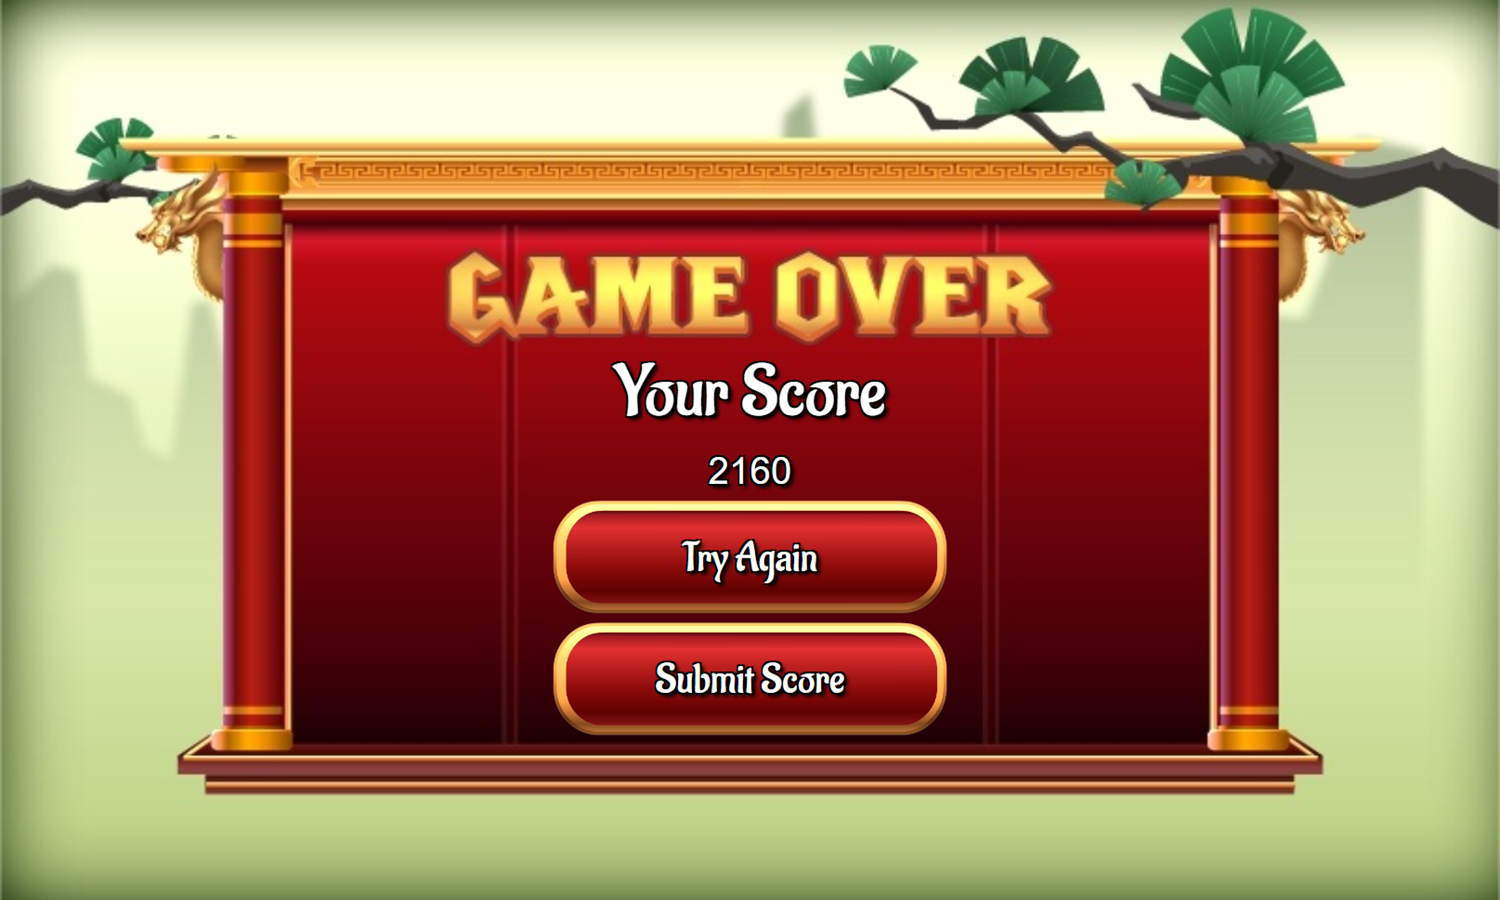 Original Mahjongg Game Over Screenshot.